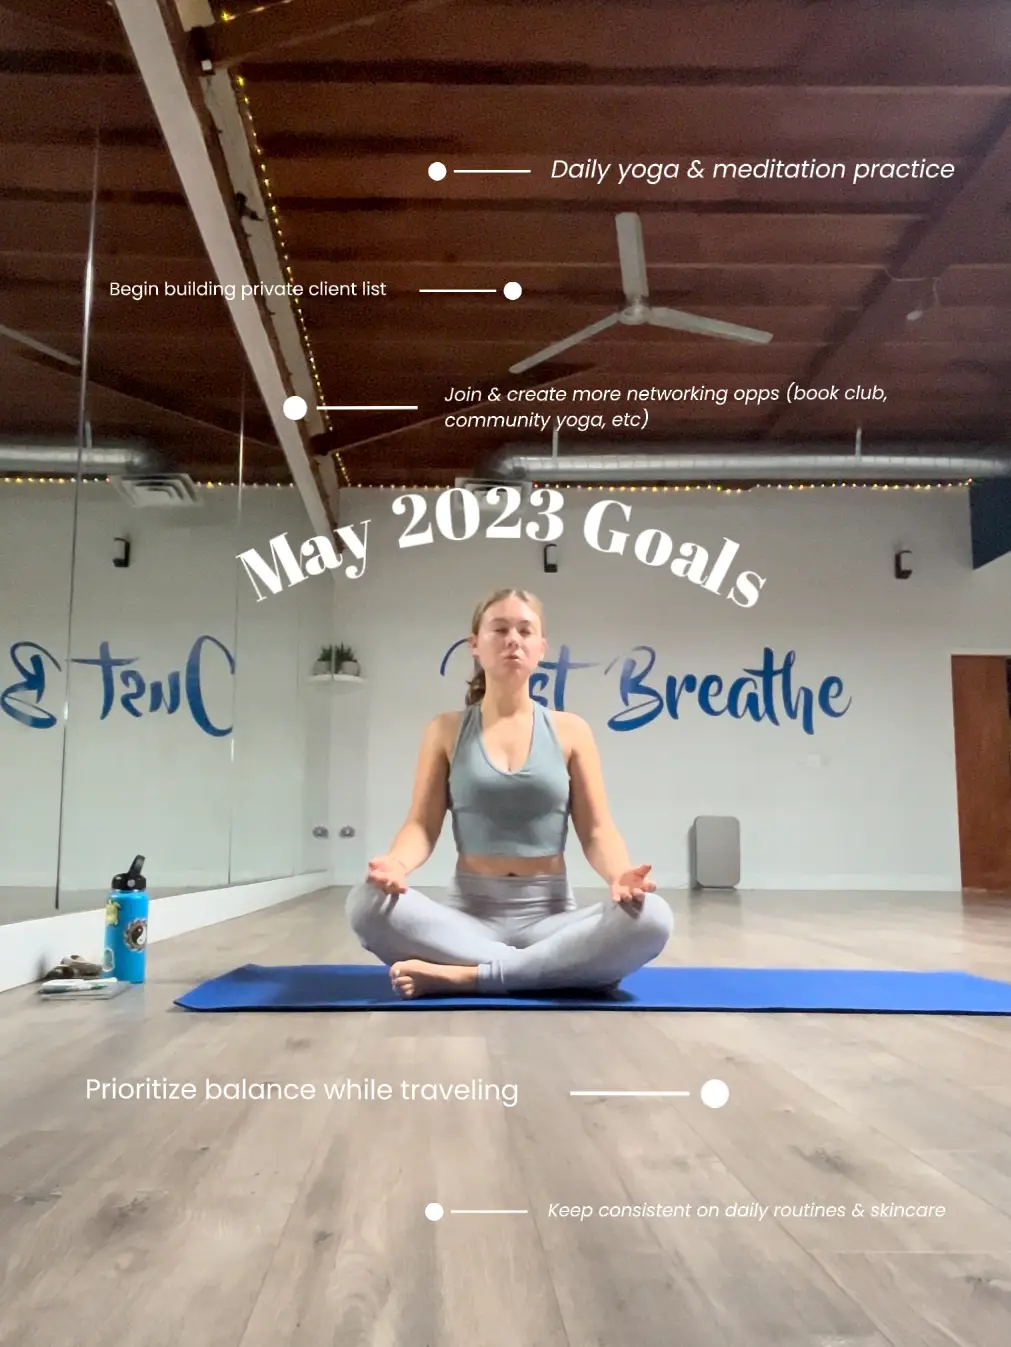 Daily Yoga & Meditation